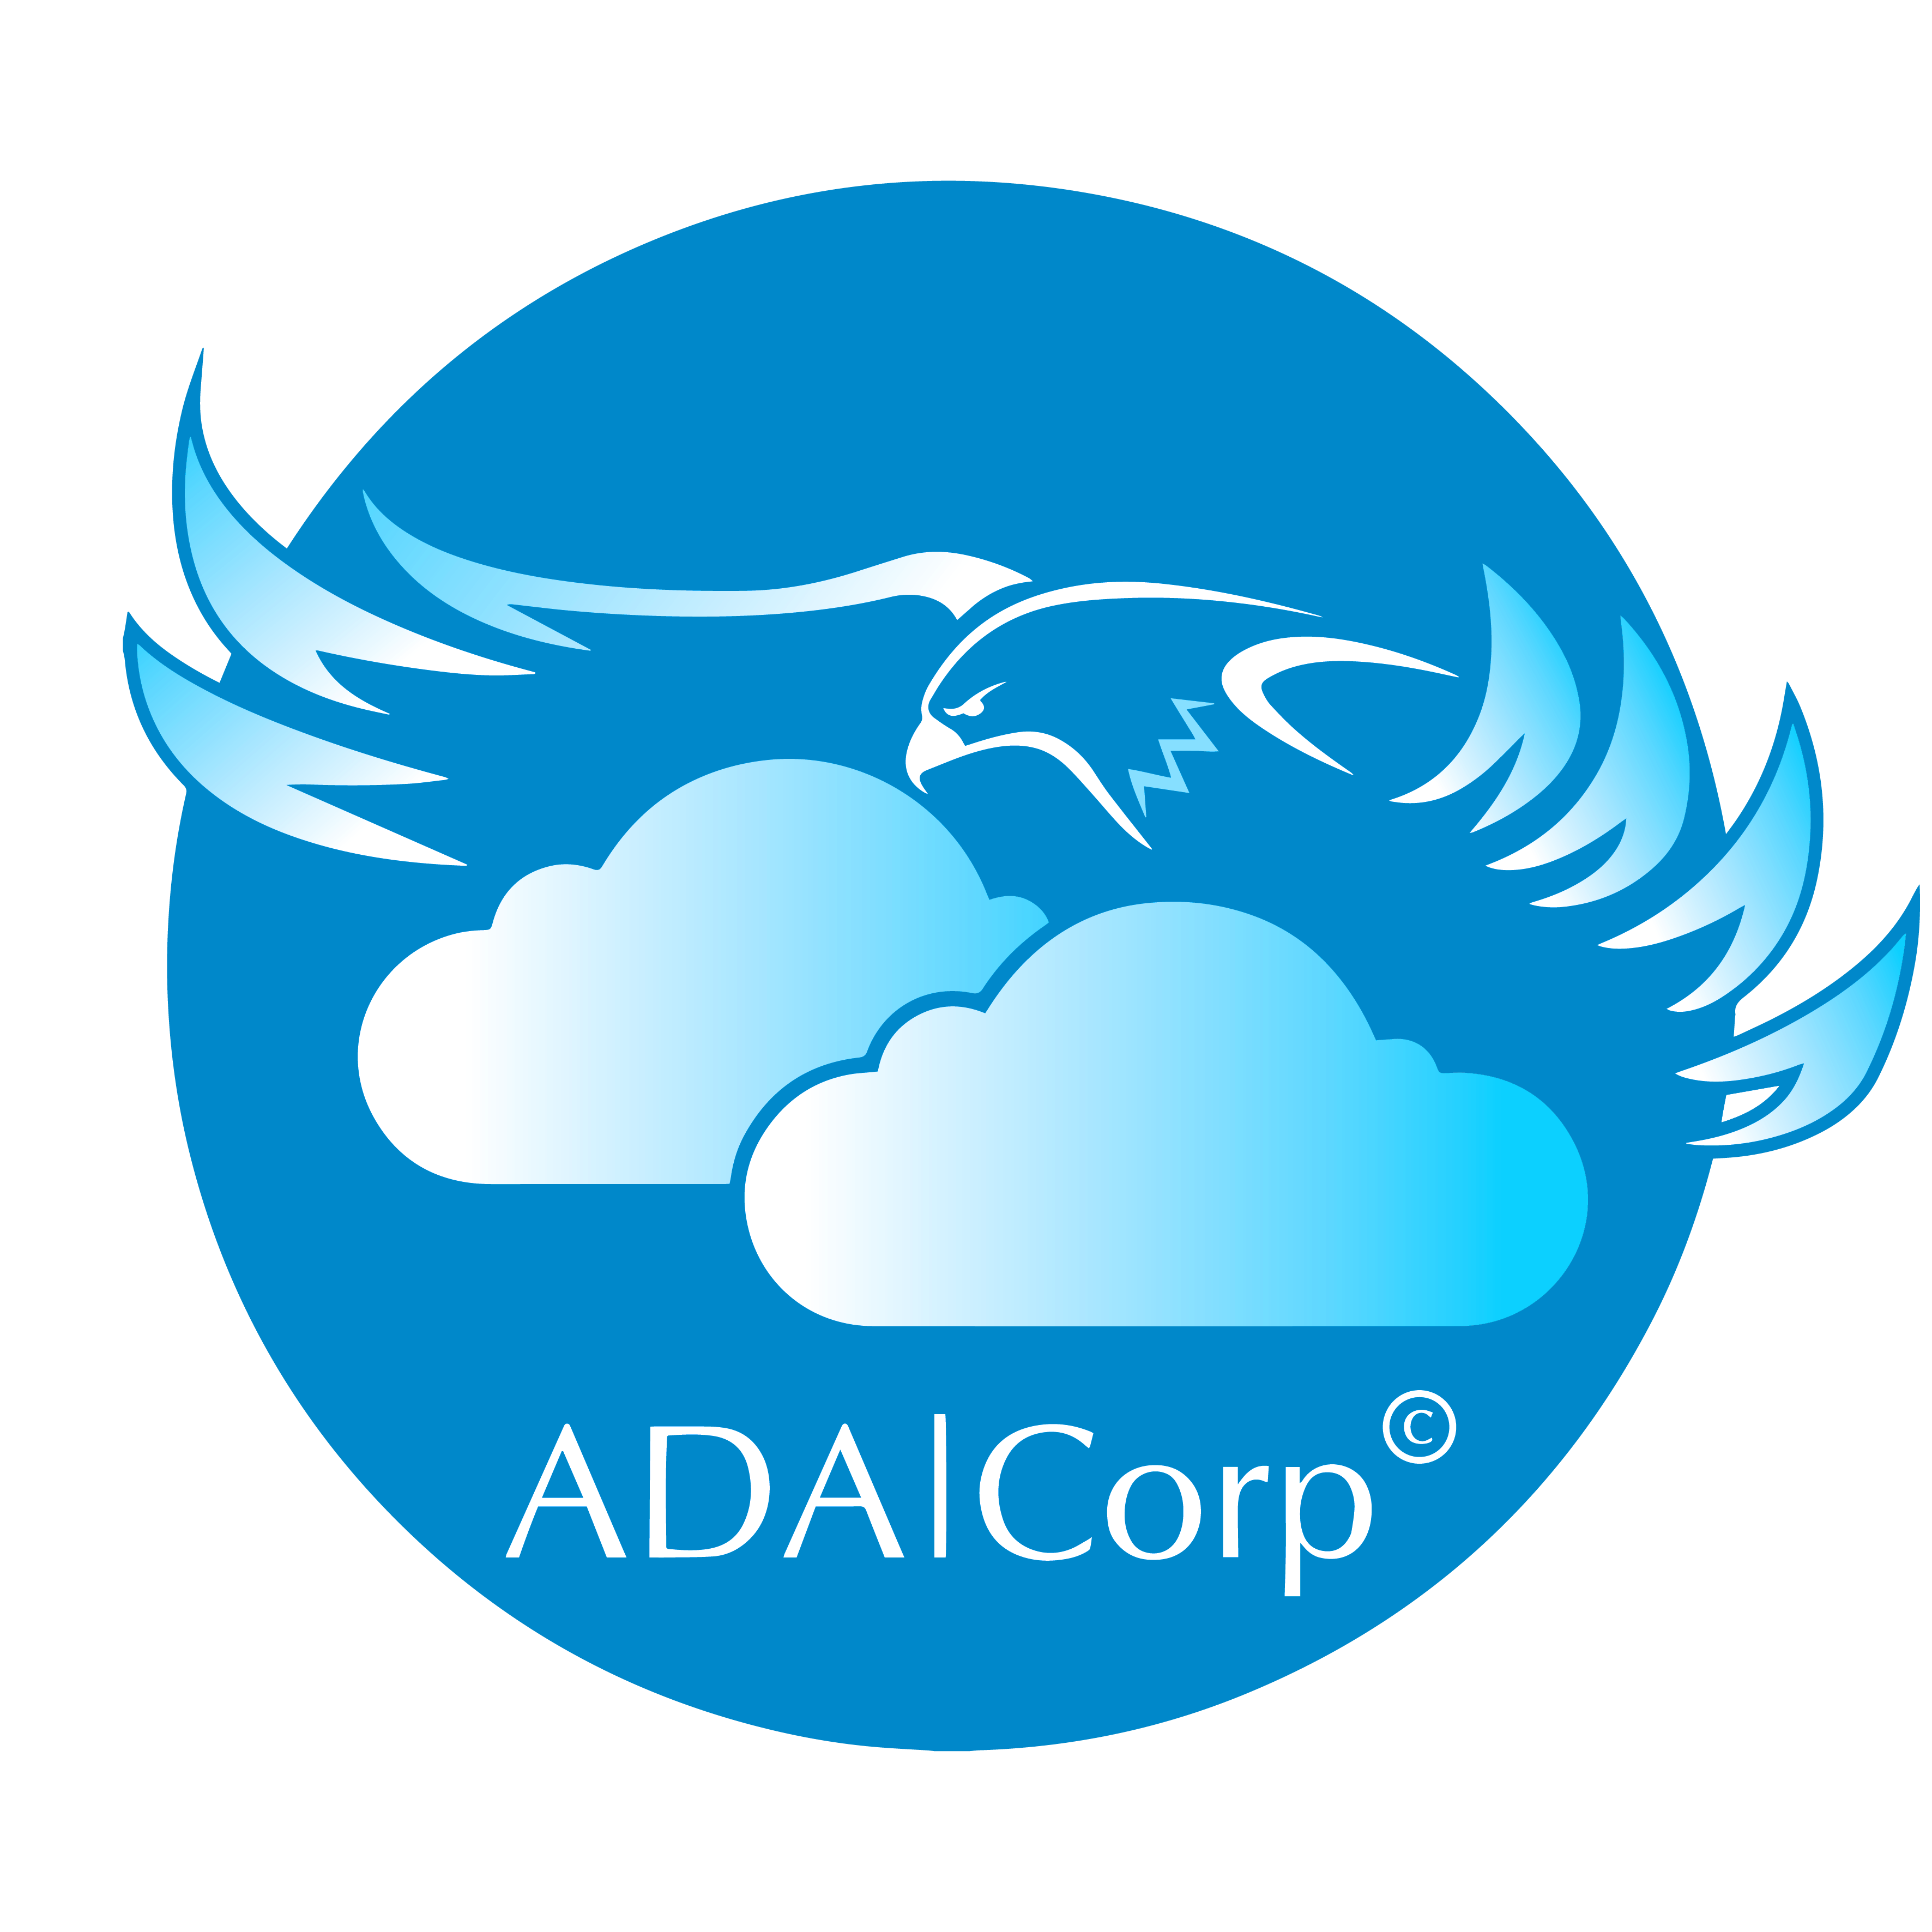 ADA|Corp logo